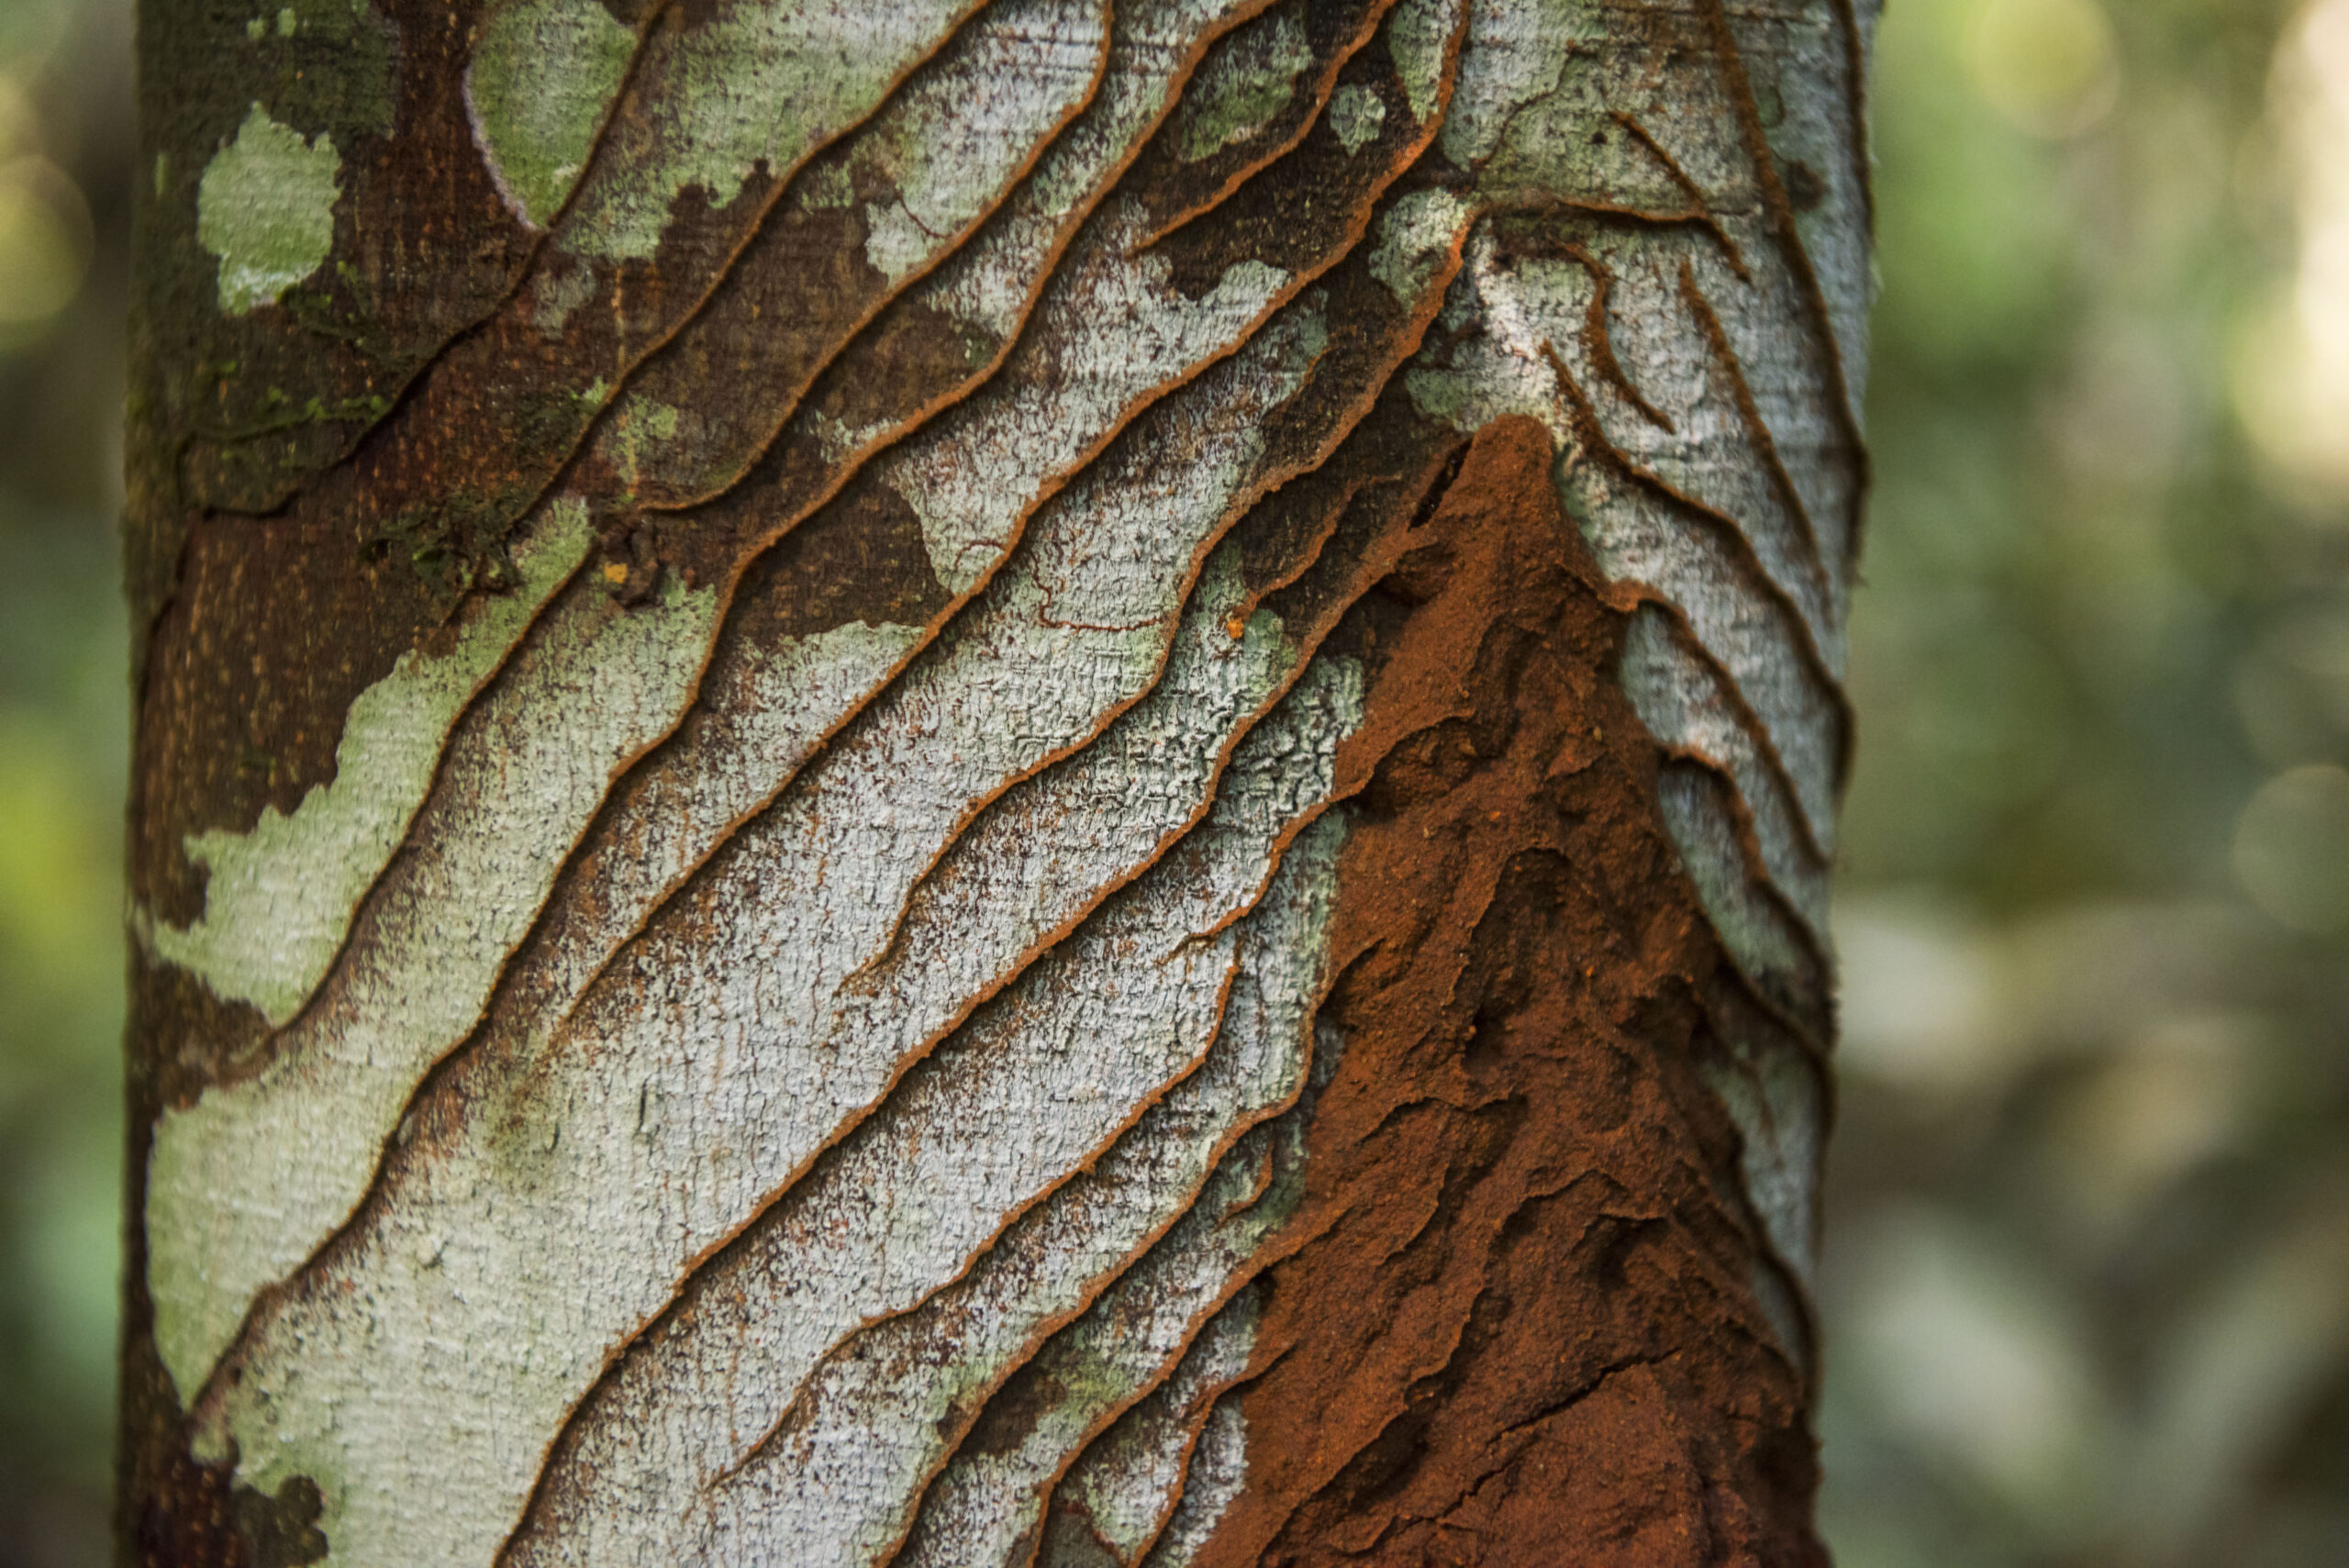 A termite nest on a tree near Kanuku Mountains Protected Area, Guyana. © Daniel Rosengren